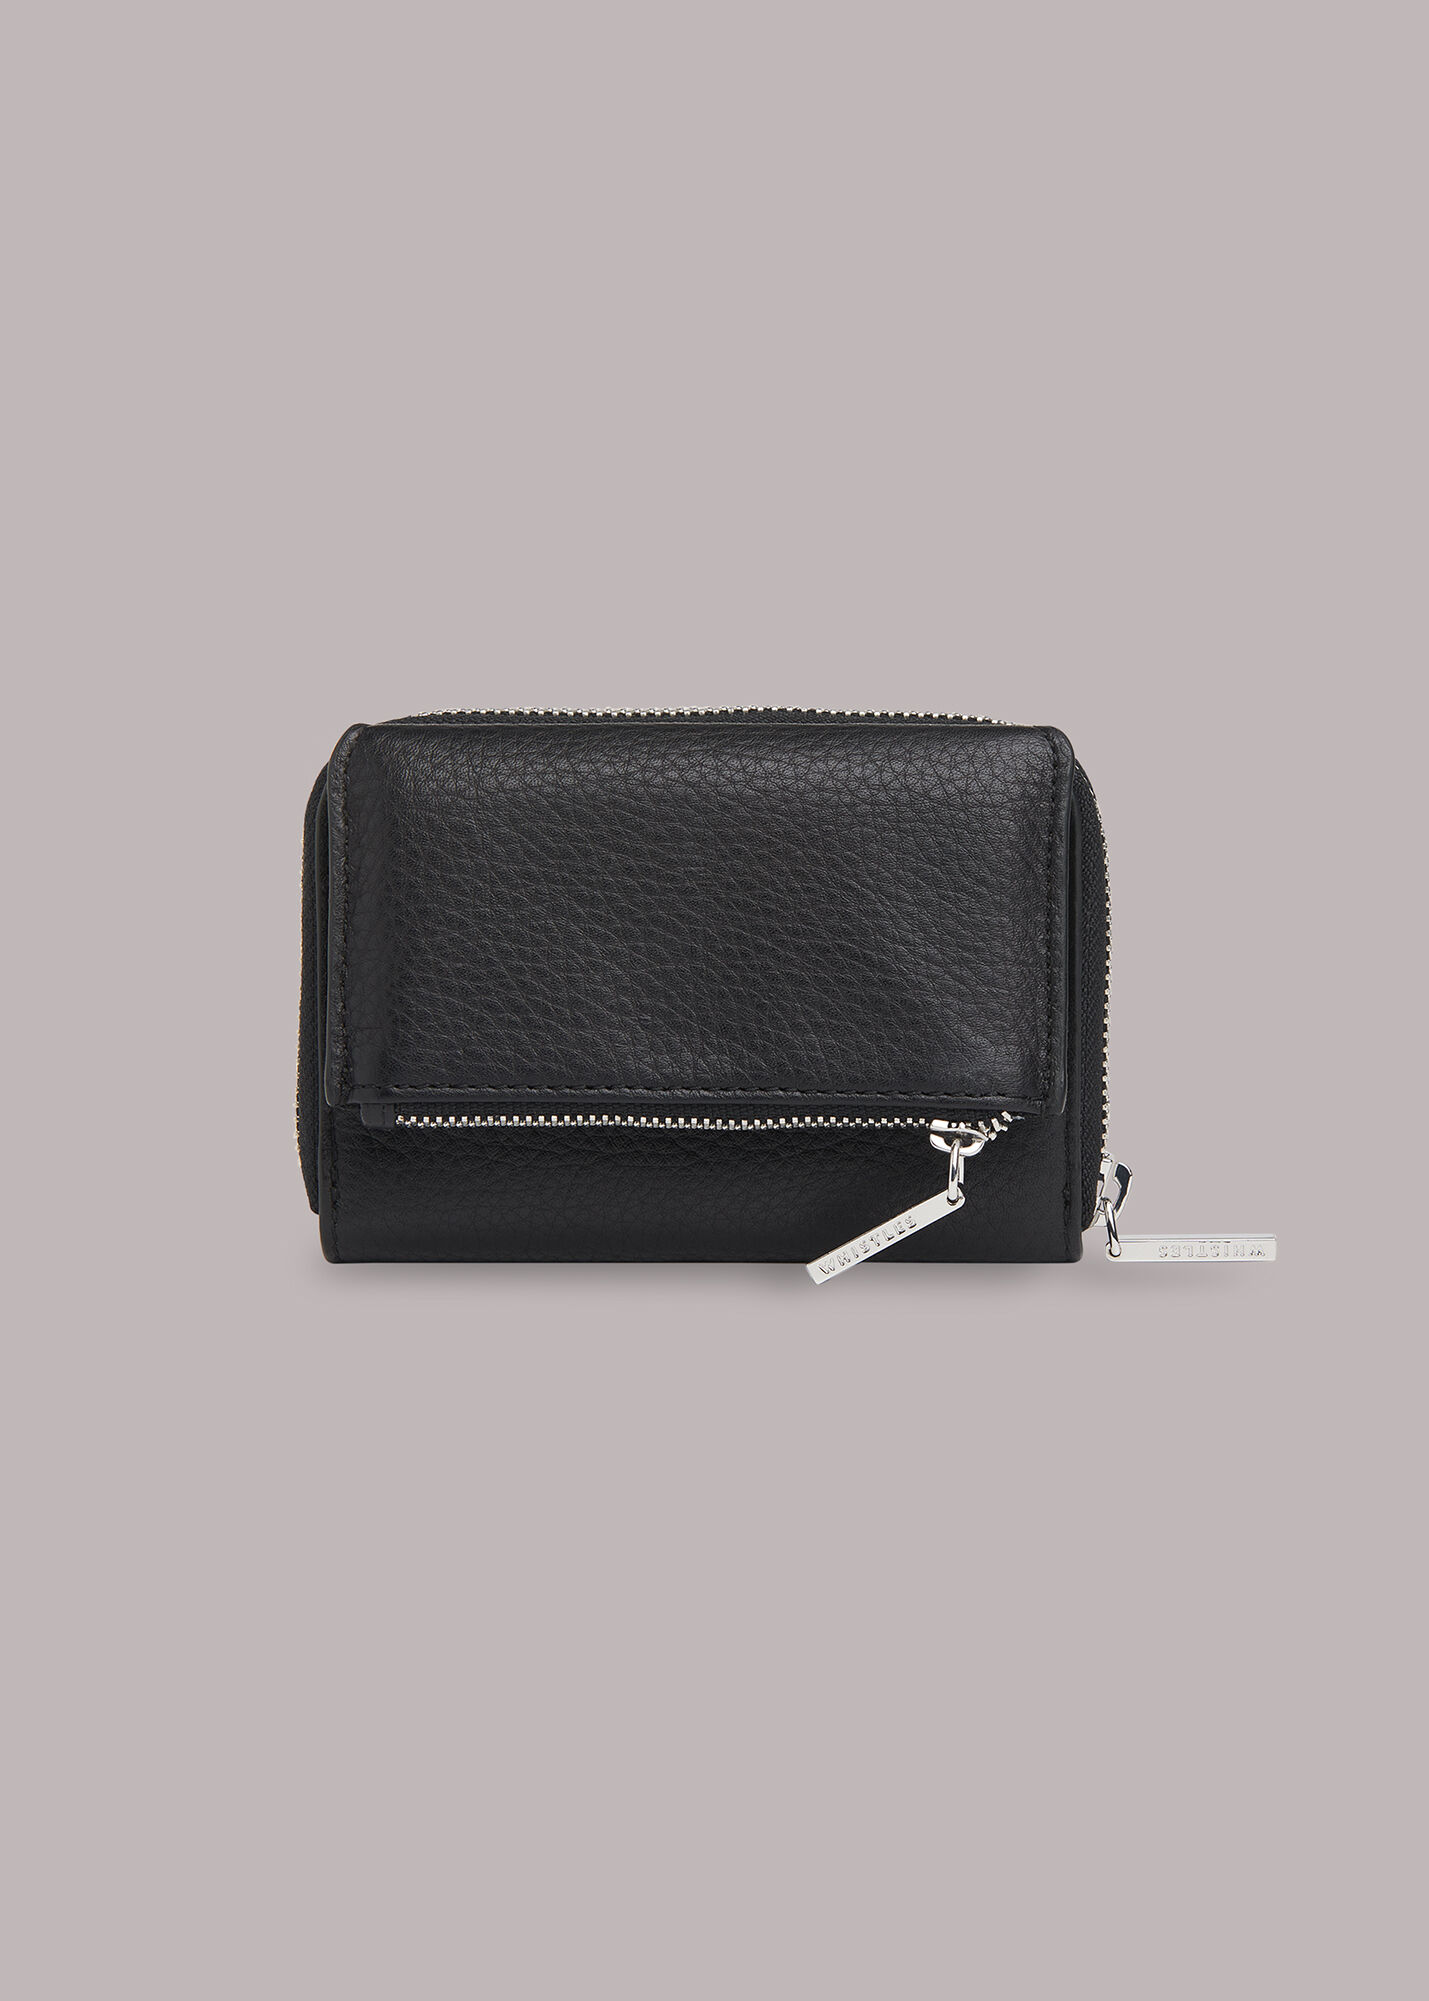 RFID Unisex Genuine Soft Leather Compact Slim Wallet Card Holder Zip Purse